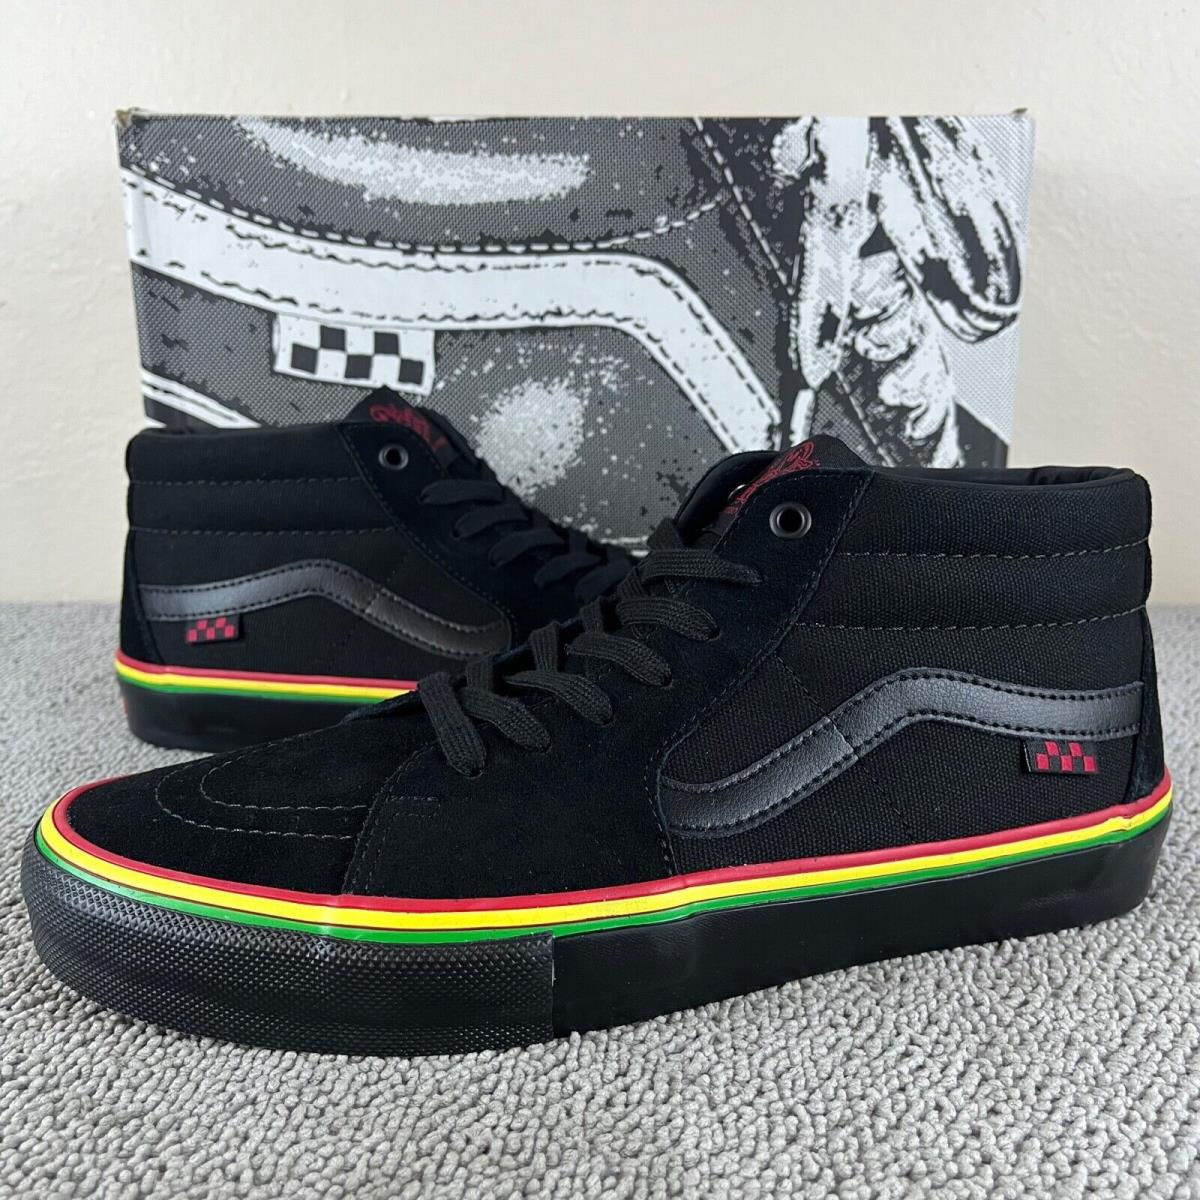 Vans Grosso Mid Rasta Black Ultracush 3D Skate Shoes Sneakers Men`s Size 10.5